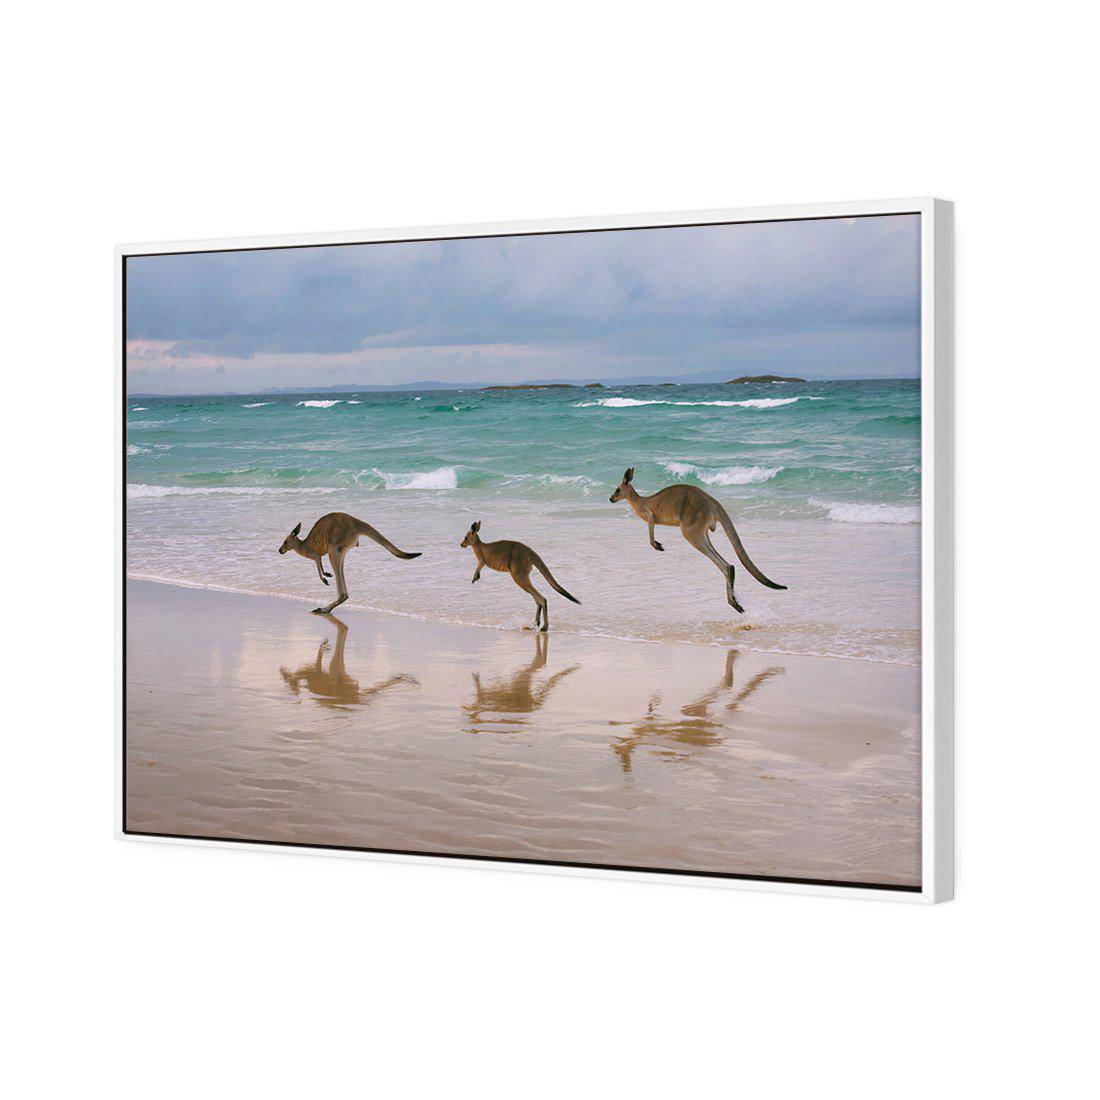 Kangaroos on Vacation Canvas Art-Canvas-Wall Art Designs-45x30cm-Canvas - White Frame-Wall Art Designs